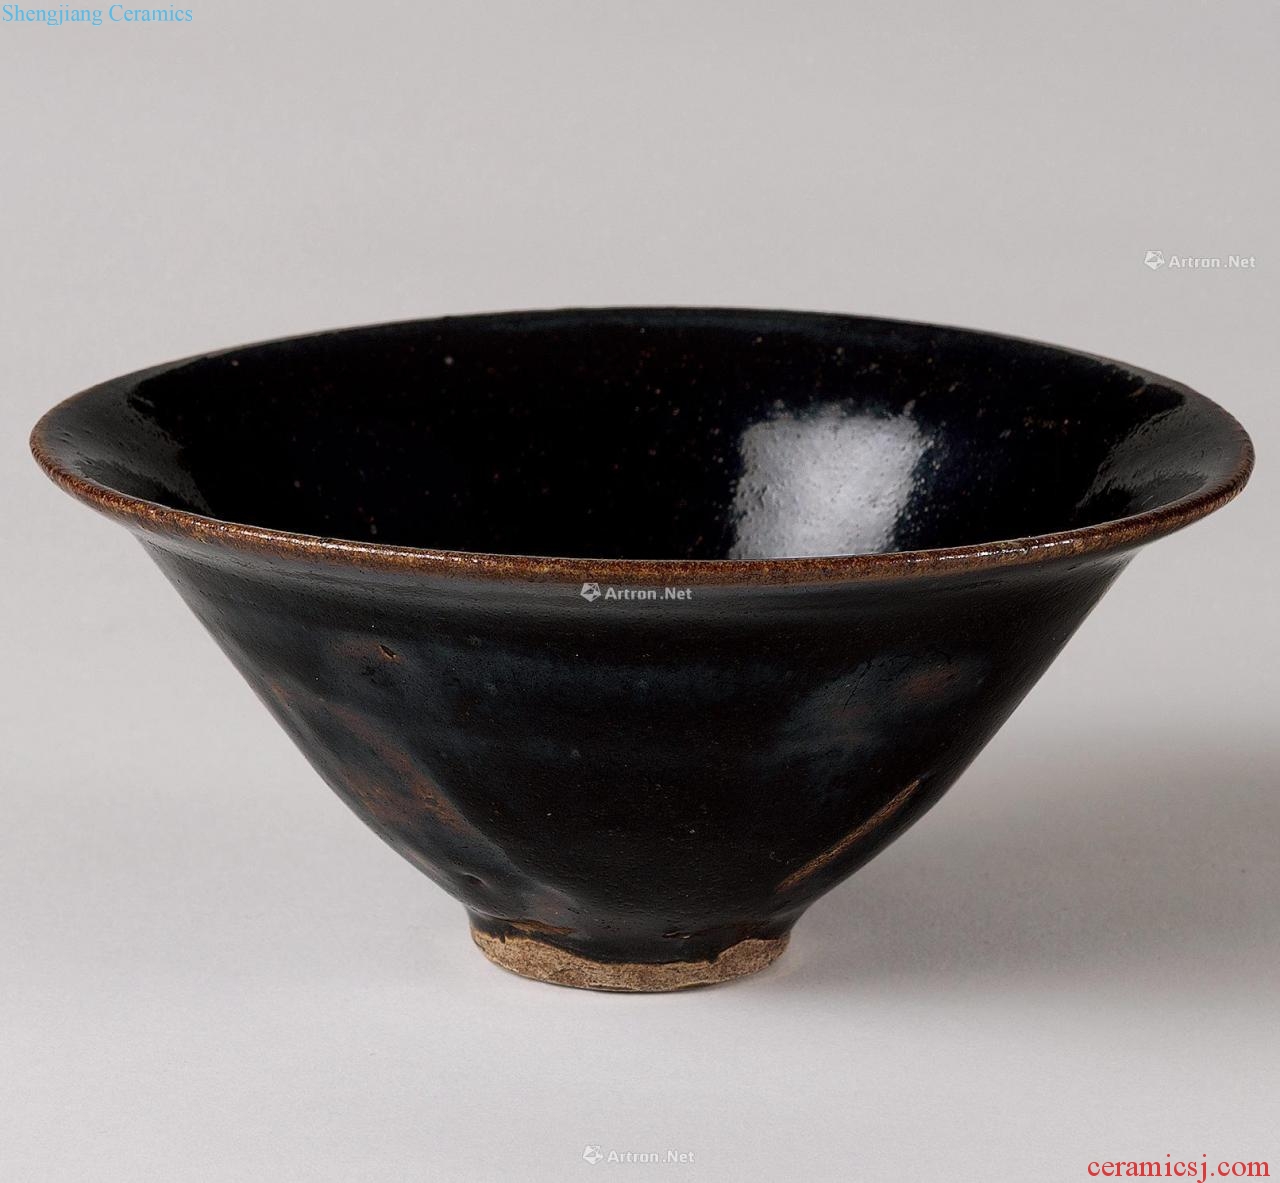 The song dynasty The black glaze temmoku bowl